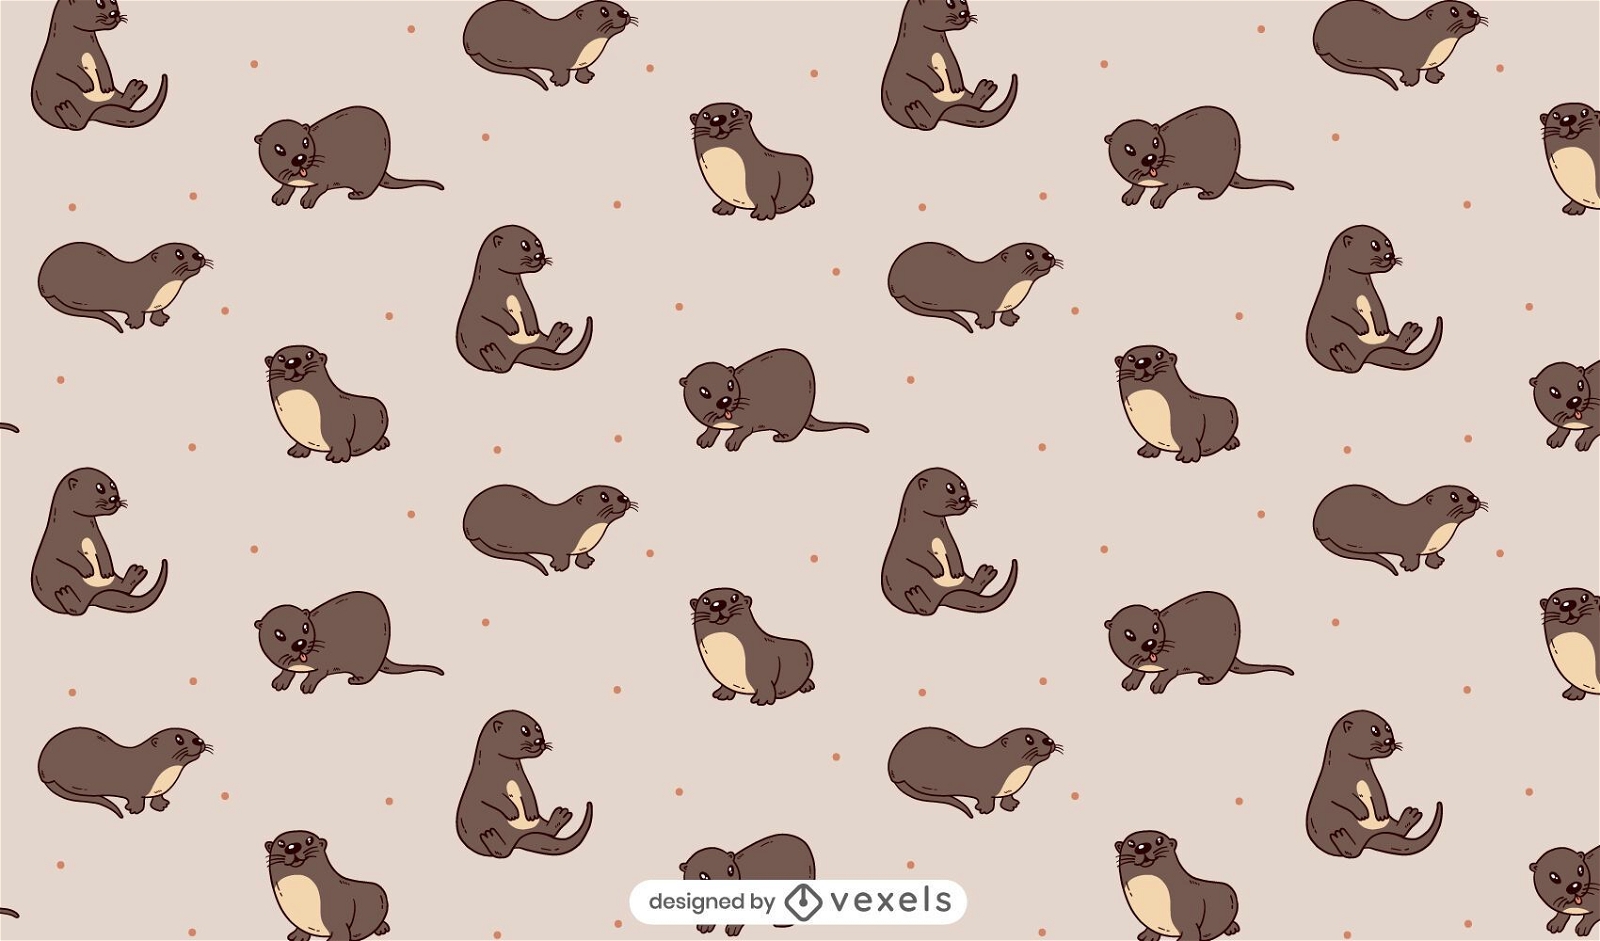 Otters pattern design